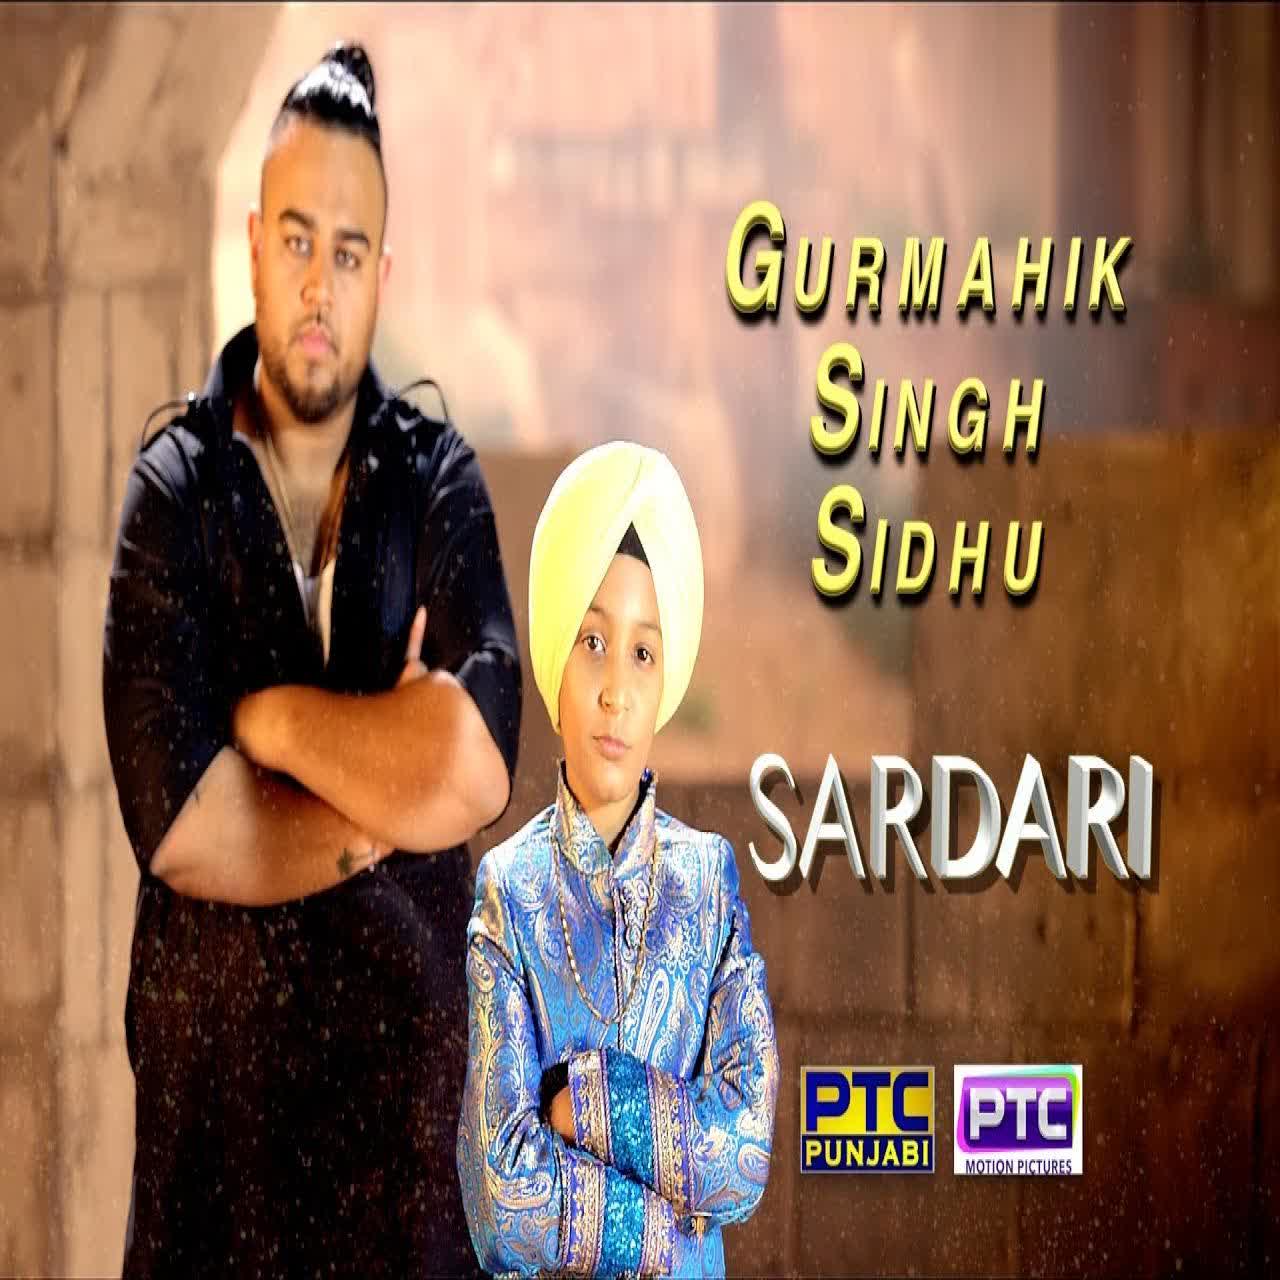 Sardari Gurmahik Singh Sidhu mp3 song